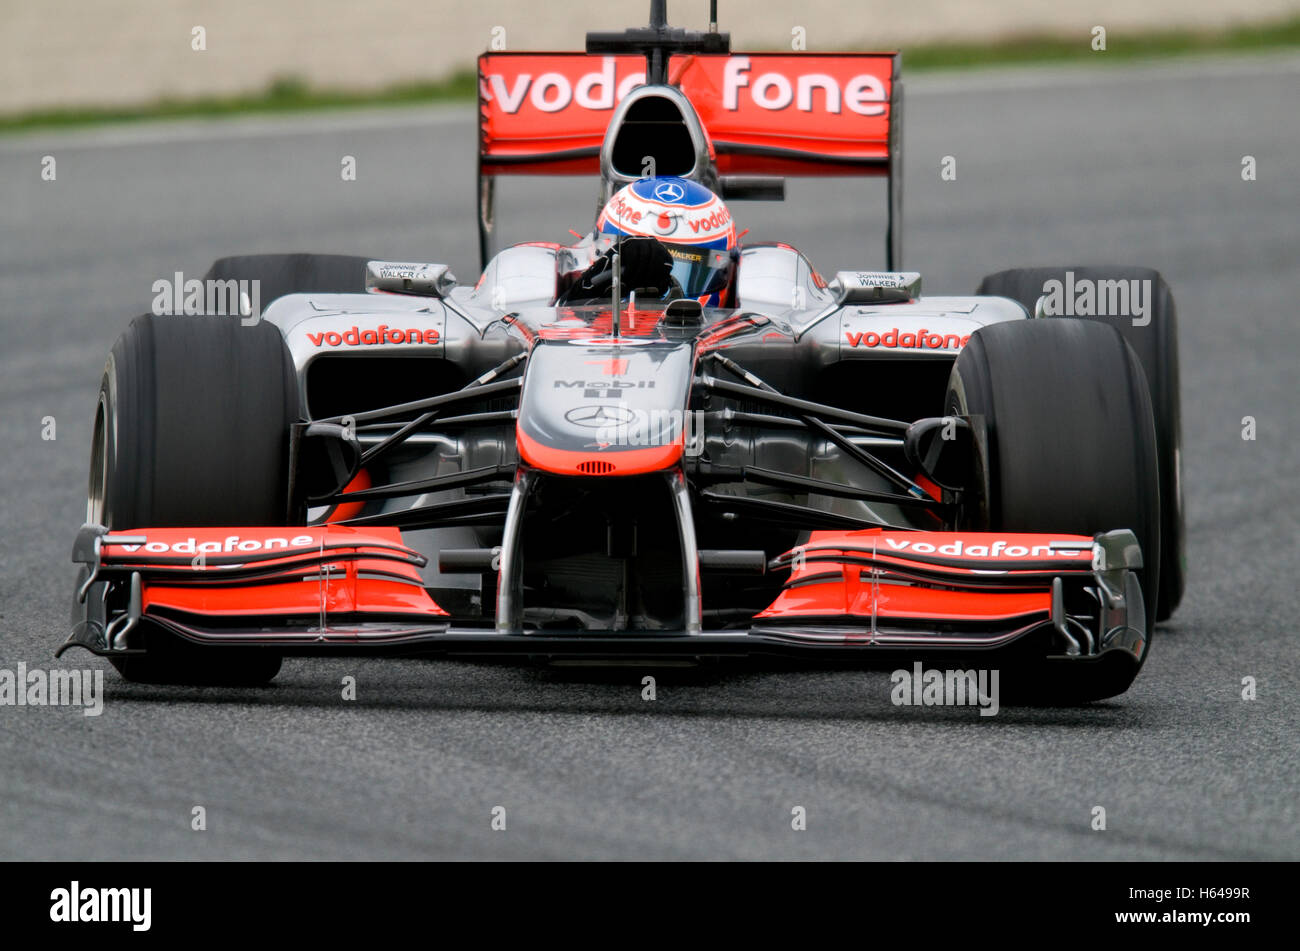 Motorsport, Jenson Button, GBR, la McLaren Mercedes MP4-25 race car, Formula 1 i test sul Circuito de Catalunya race Foto Stock